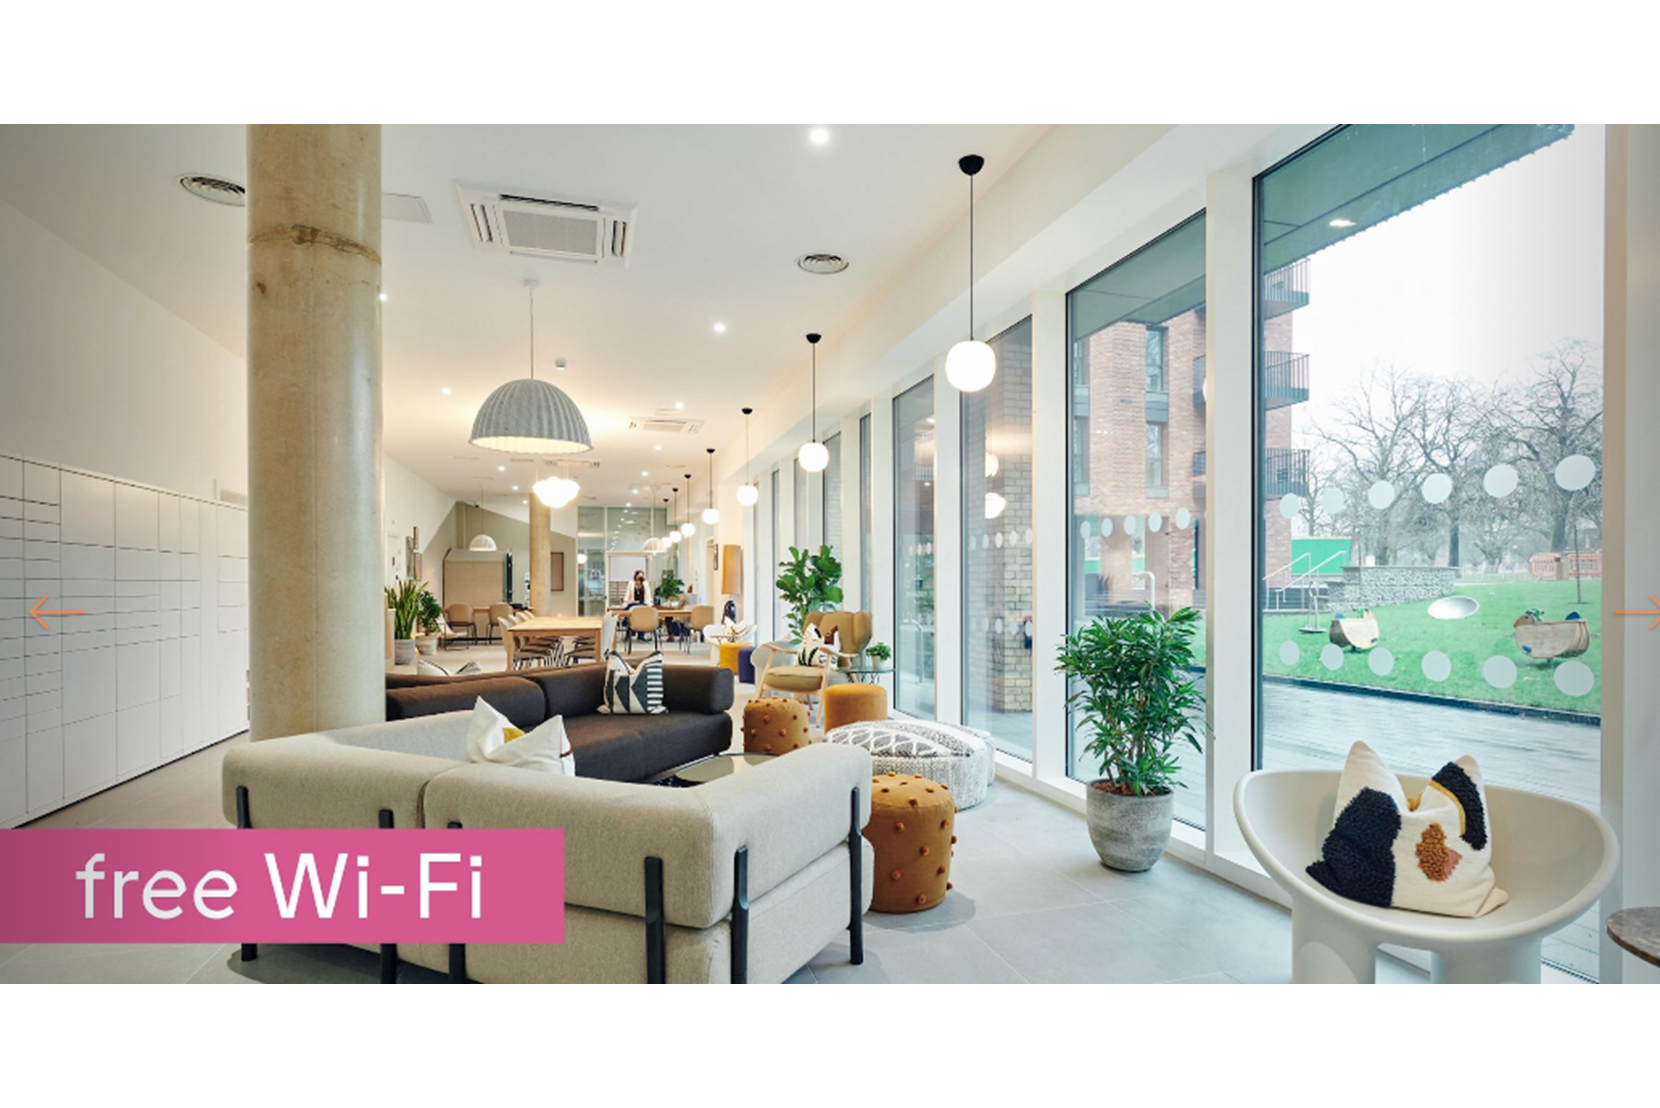 Apartment-APO-Group-Barking-Greater-London-interior-free-wifi